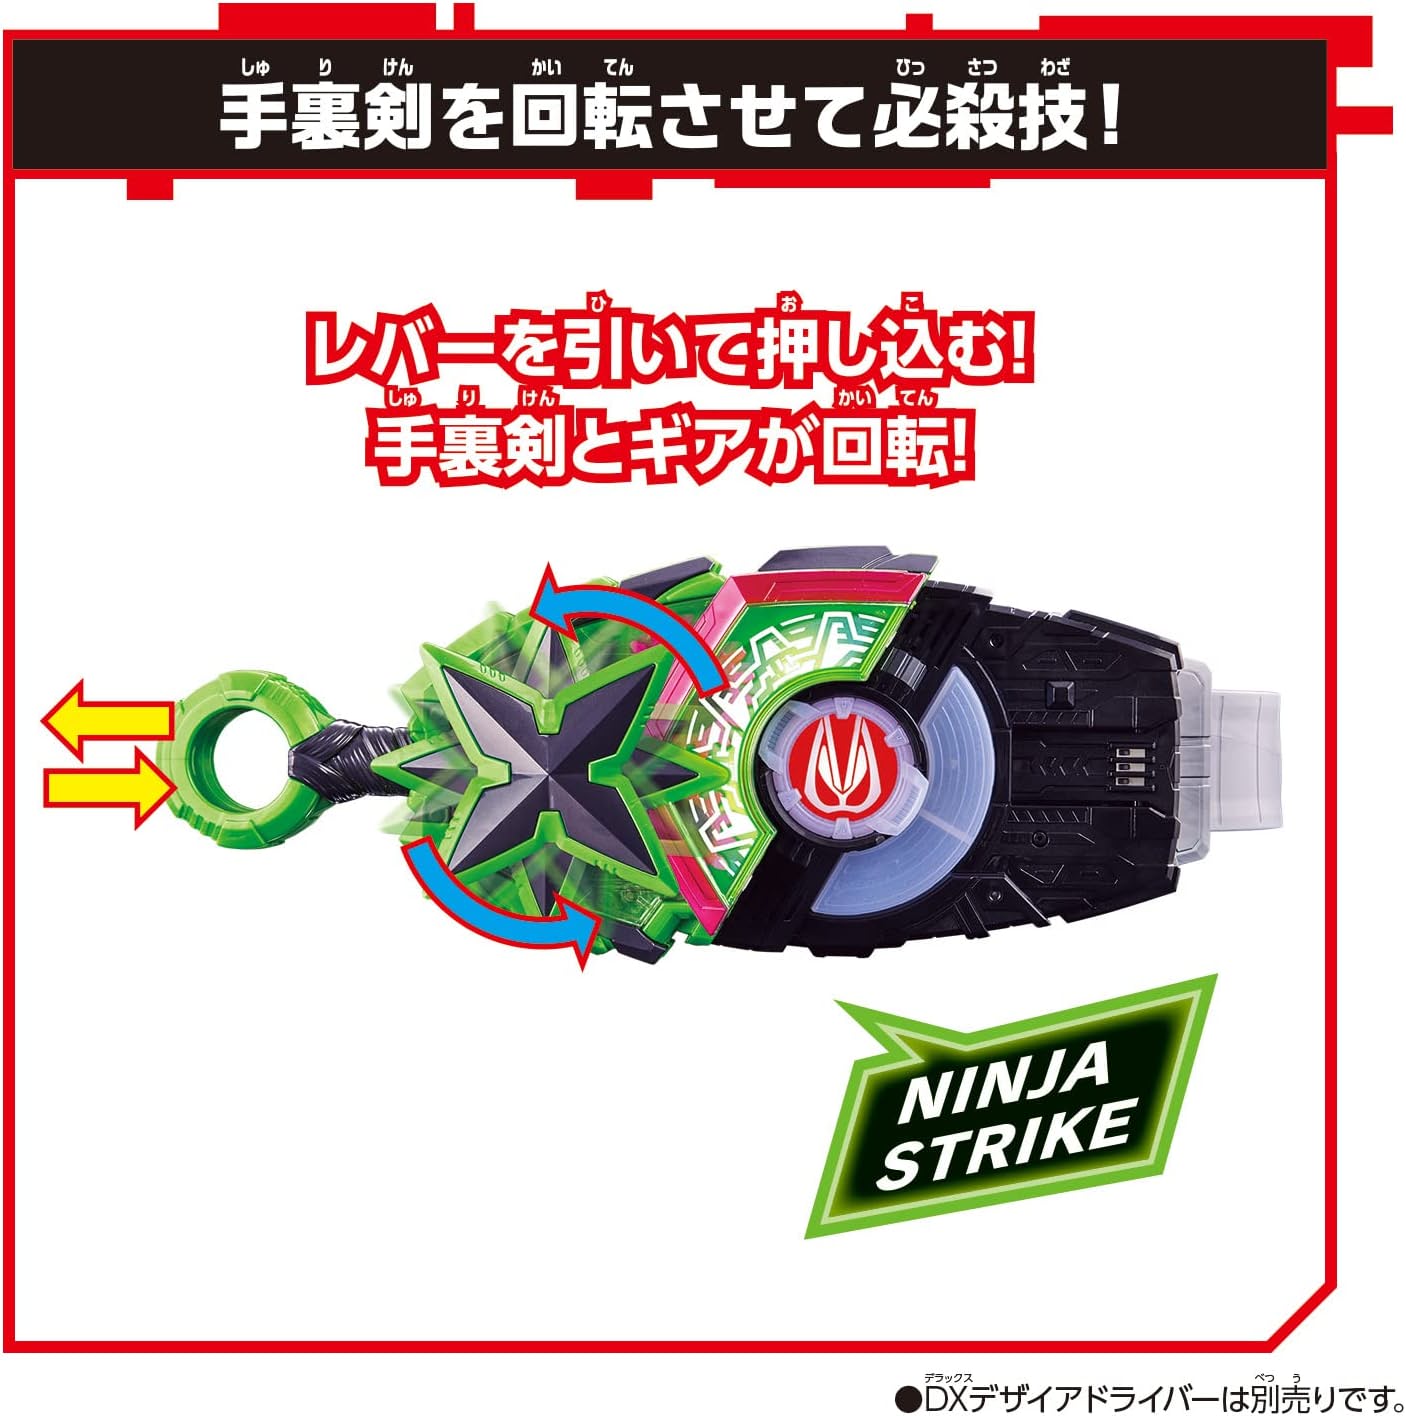 Kamen Rider Geats: DX Ninja Raise Buckle | CSTOYS INTERNATIONAL